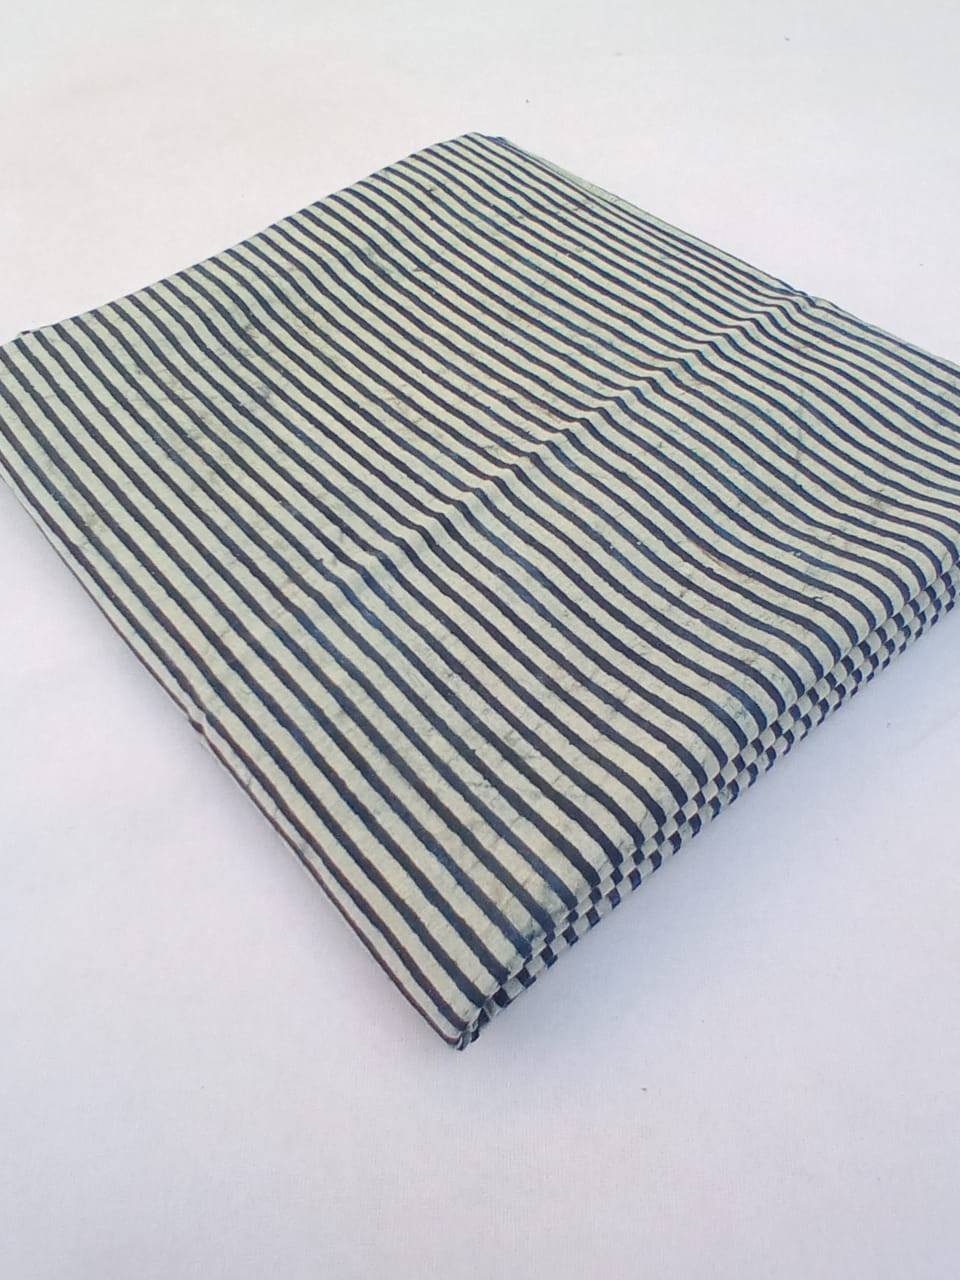 Block Printed Stripe Fabric for Kurtis and Palazzo